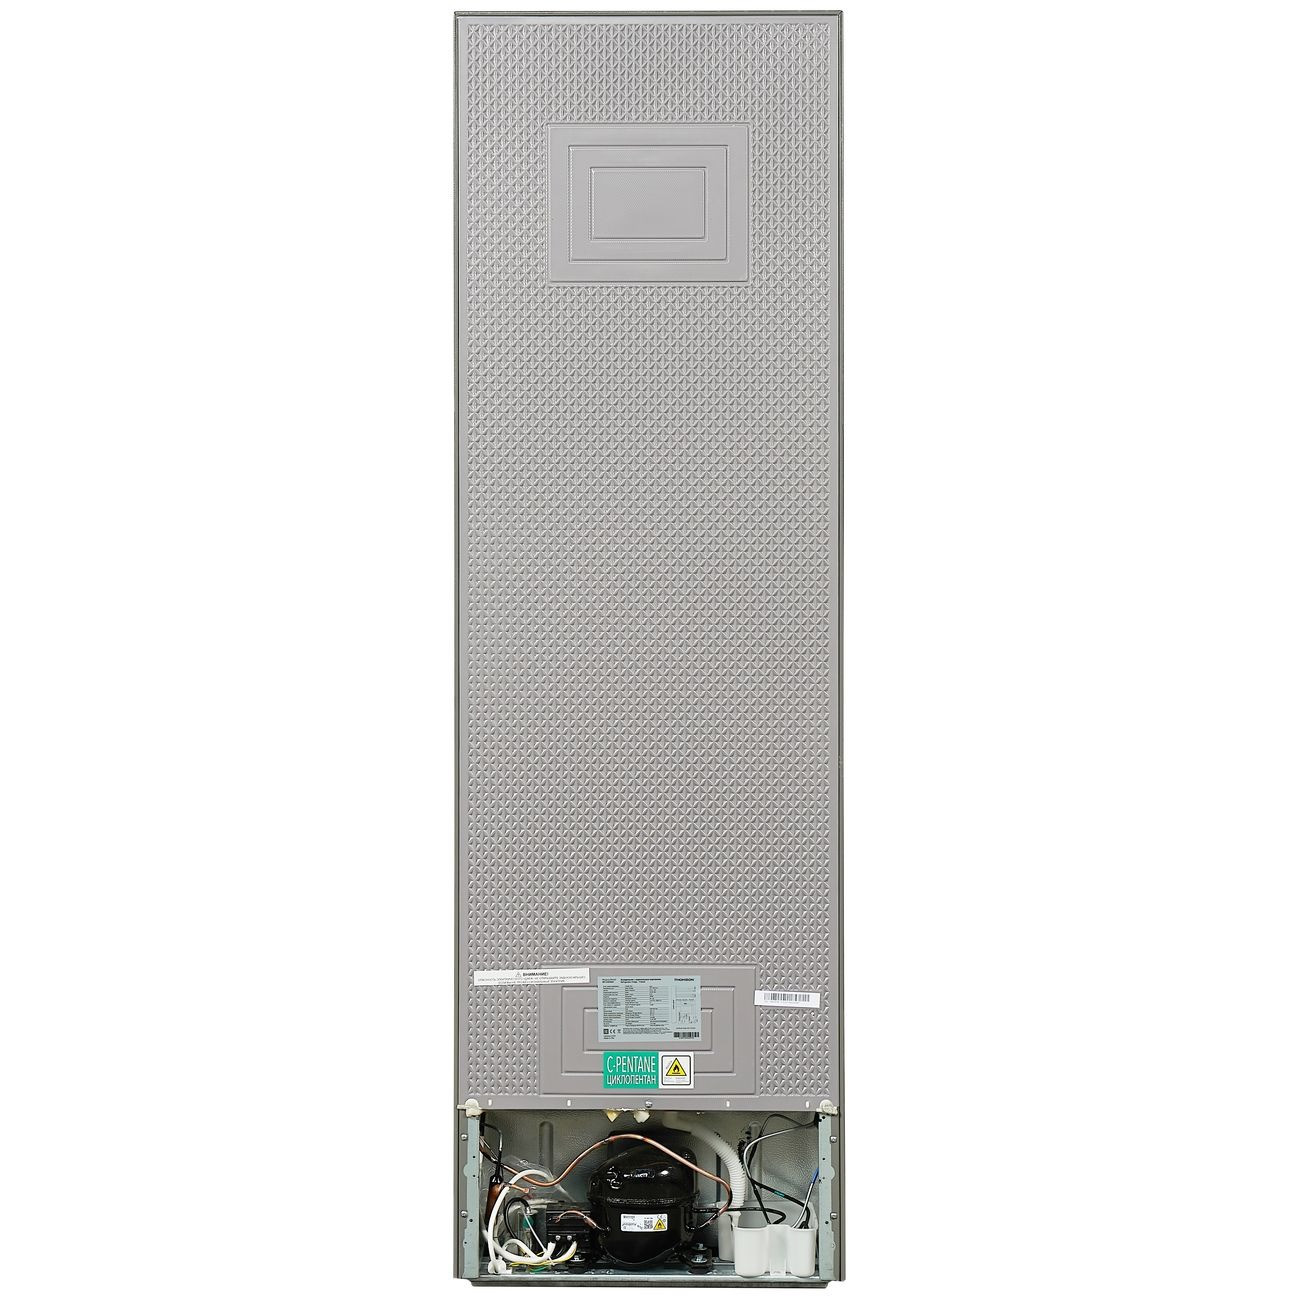 Холодильник Thomson BFC30EN04